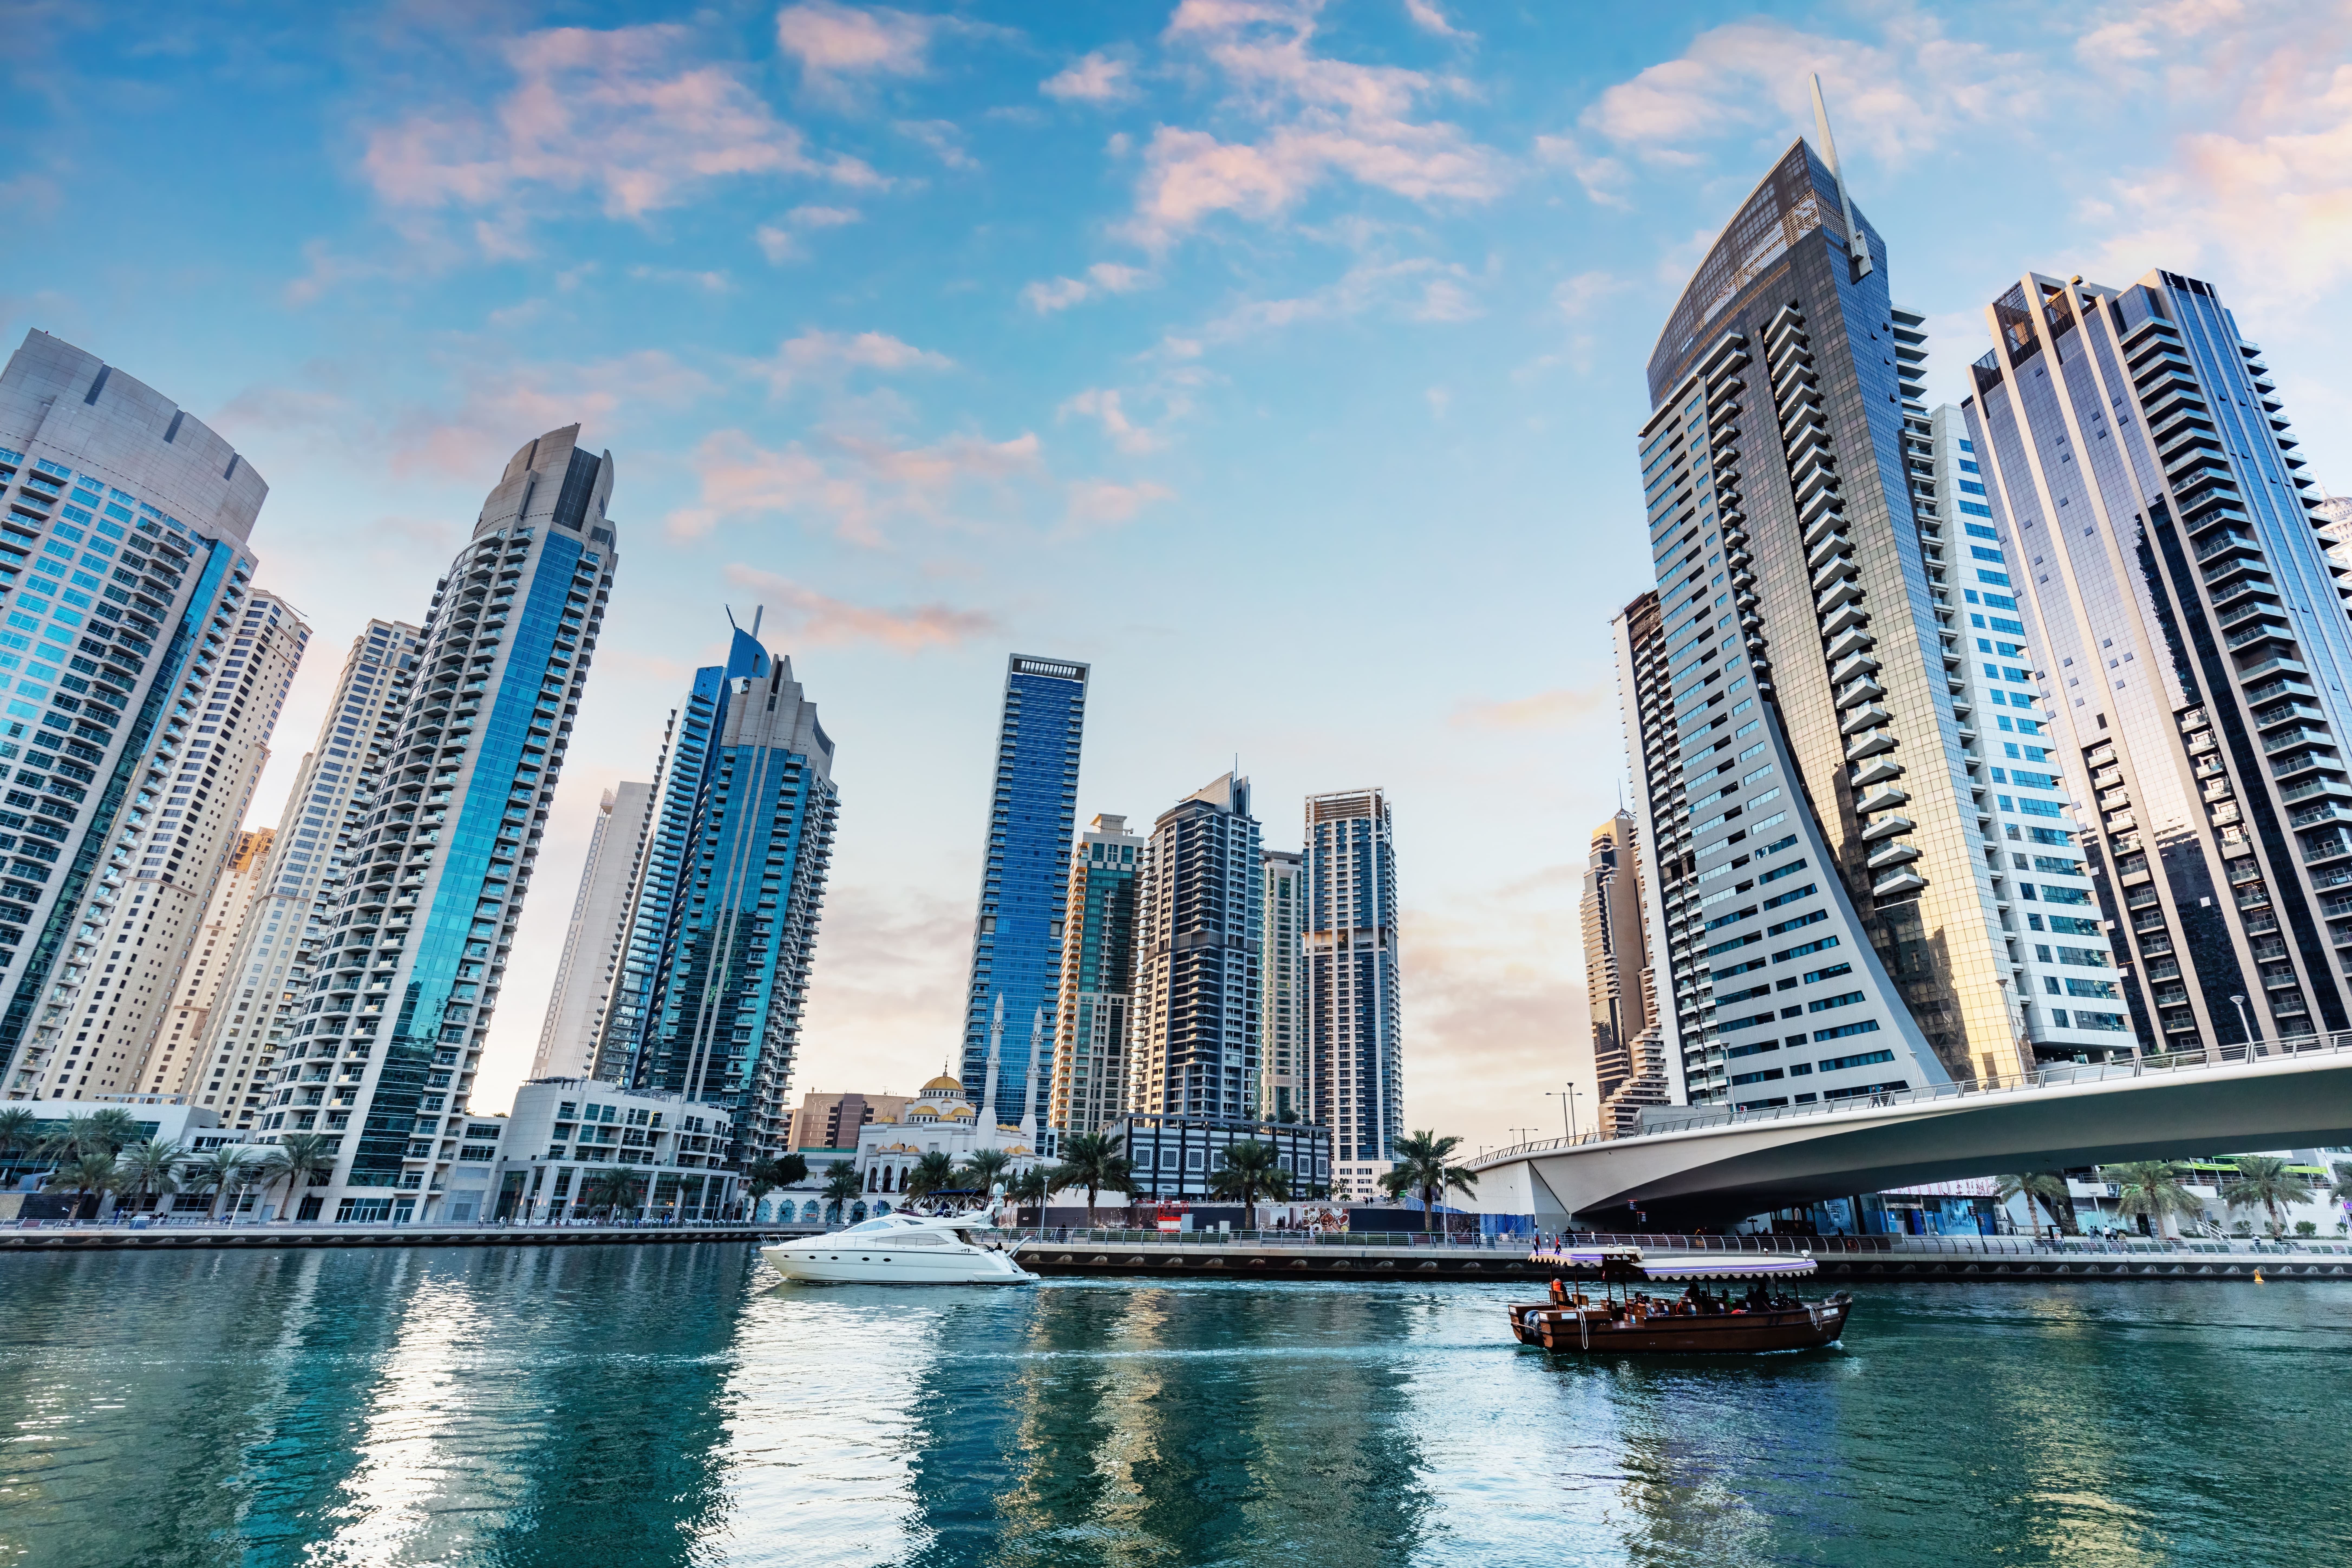 Dubai – the Emirate of childhood